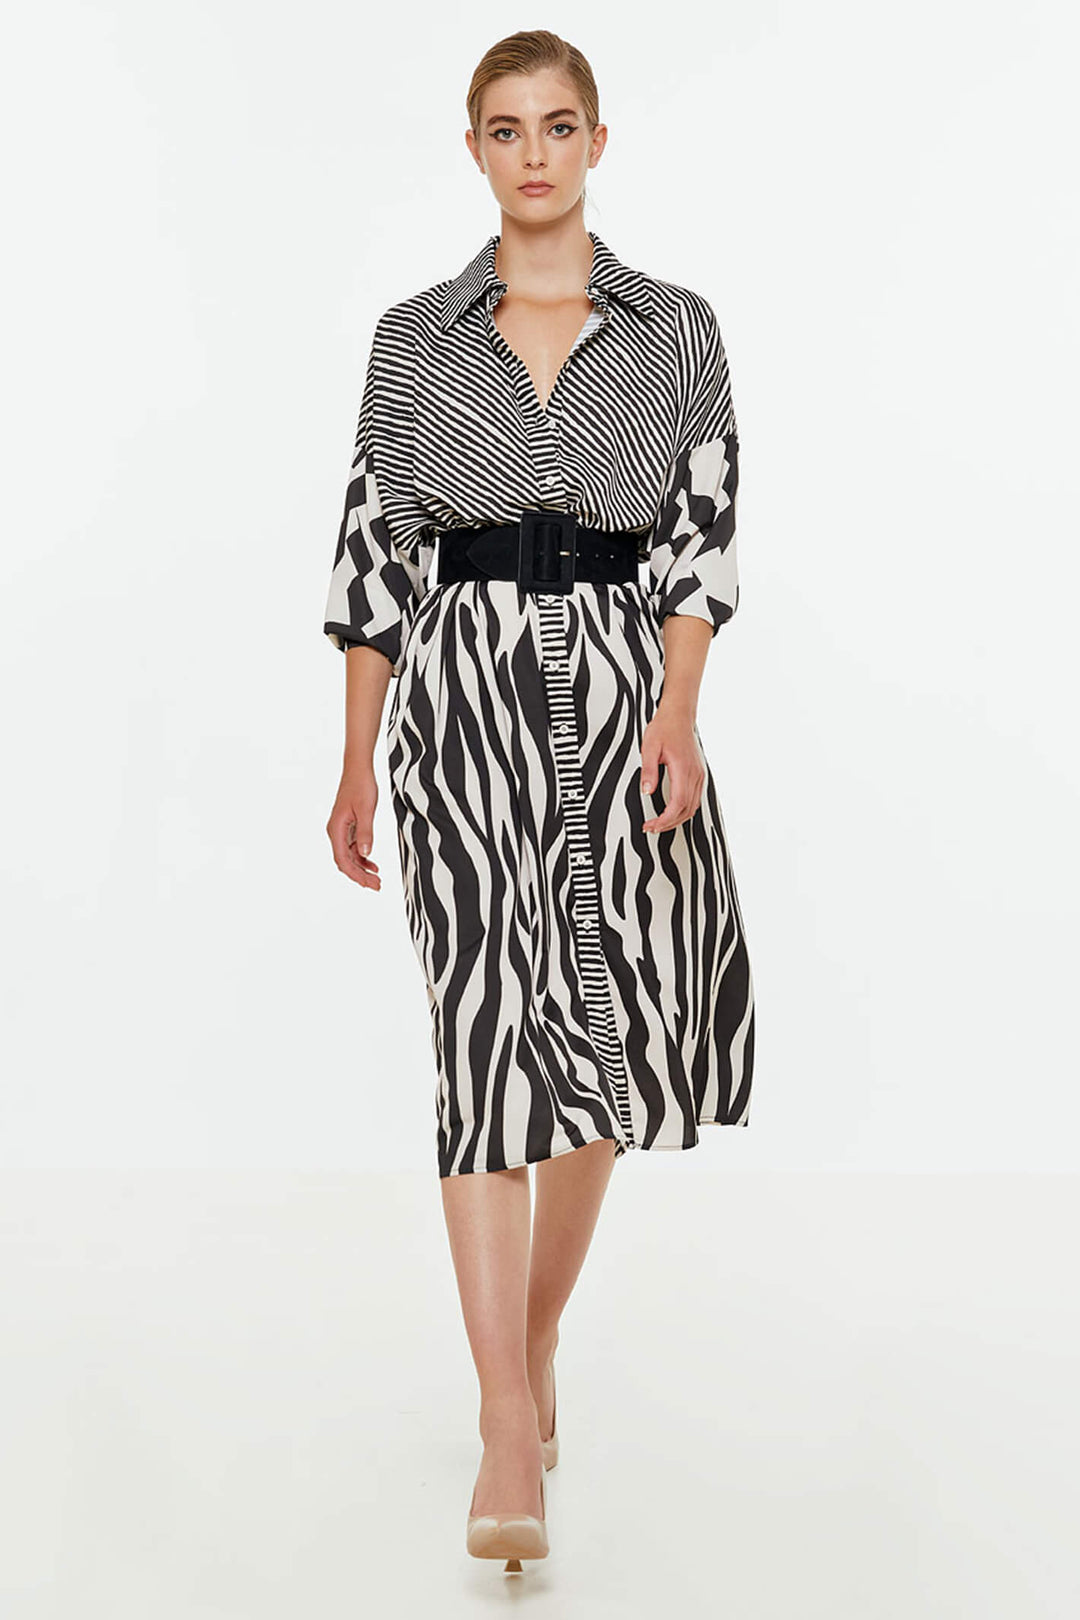 Access Fashion 3370-1057 Black & White Animal Print Shirt Dress - Experience Boutique